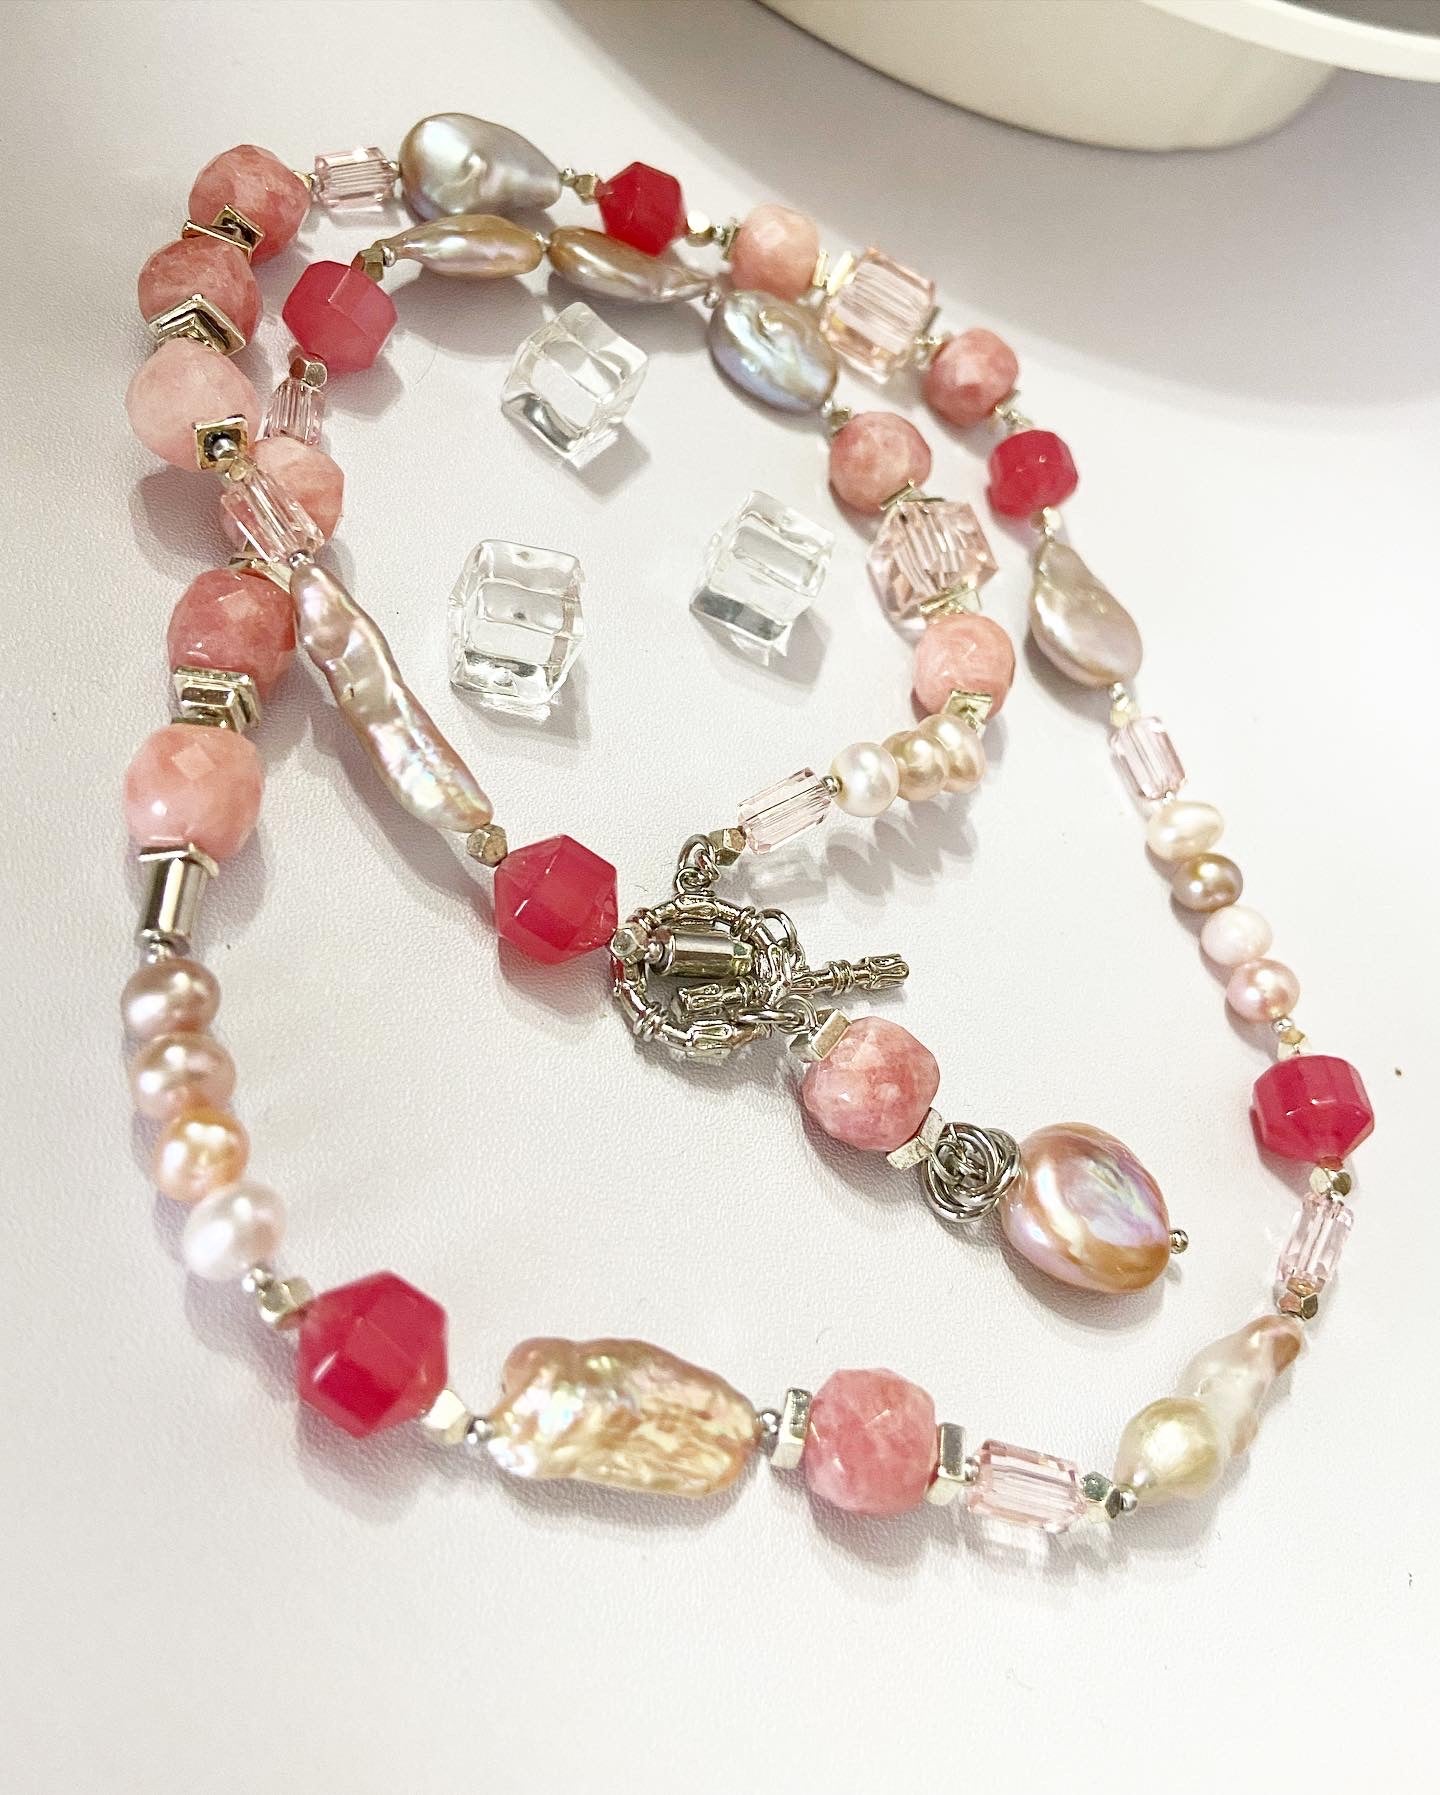 Beads with pearls, quartzite, chalcedony, hematite, jewelry glass